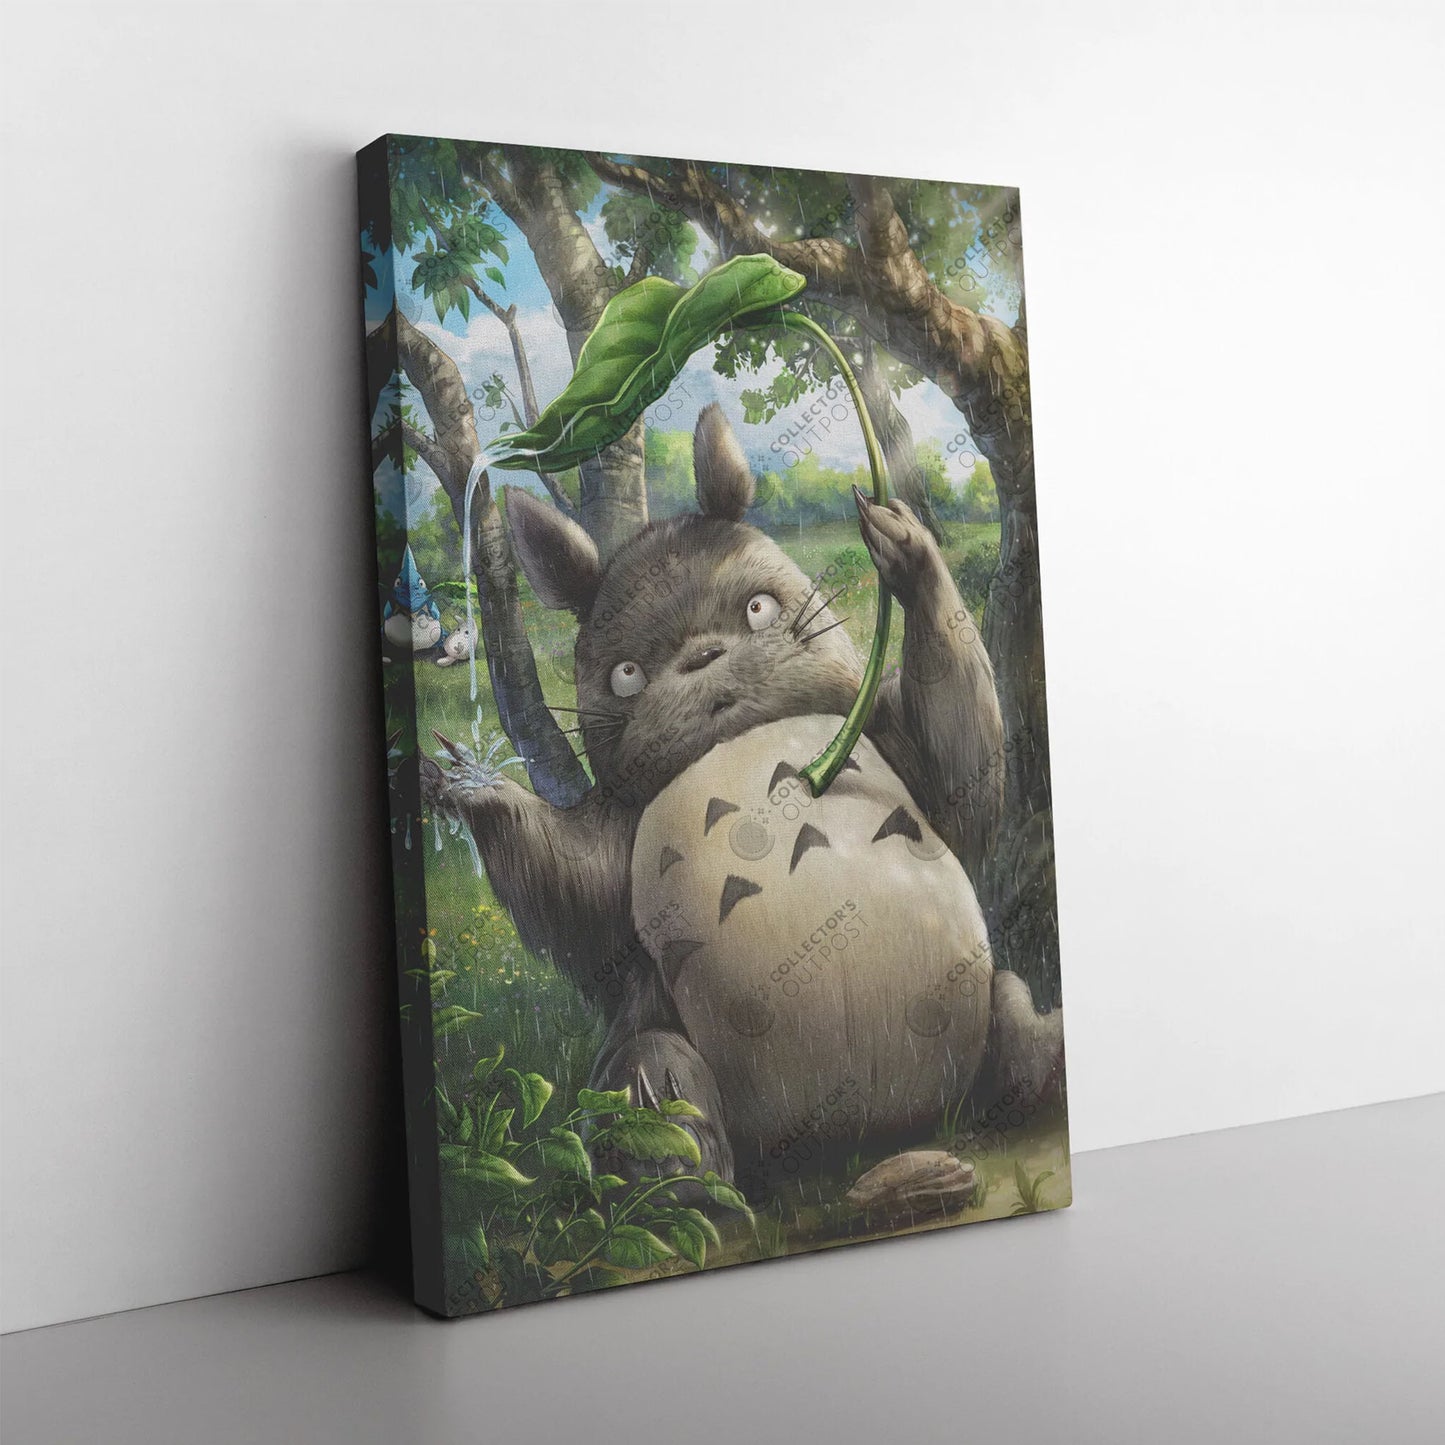 My Neighbor Totoro (Studio Ghibli) Premium Art Print Studio Ghibli